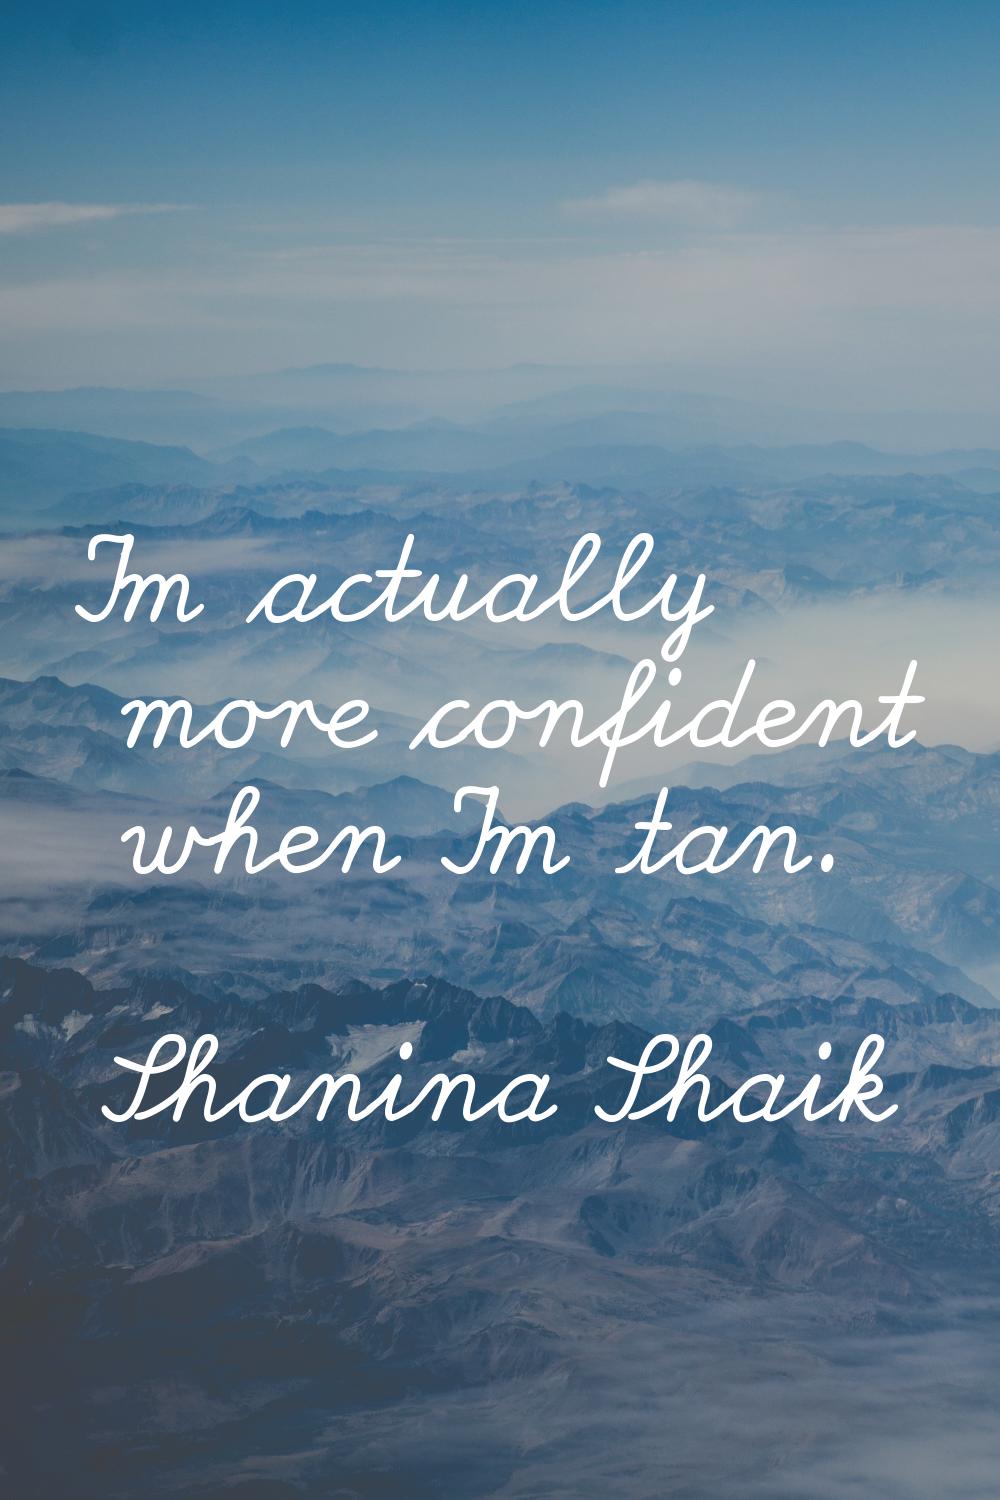 I'm actually more confident when I'm tan.